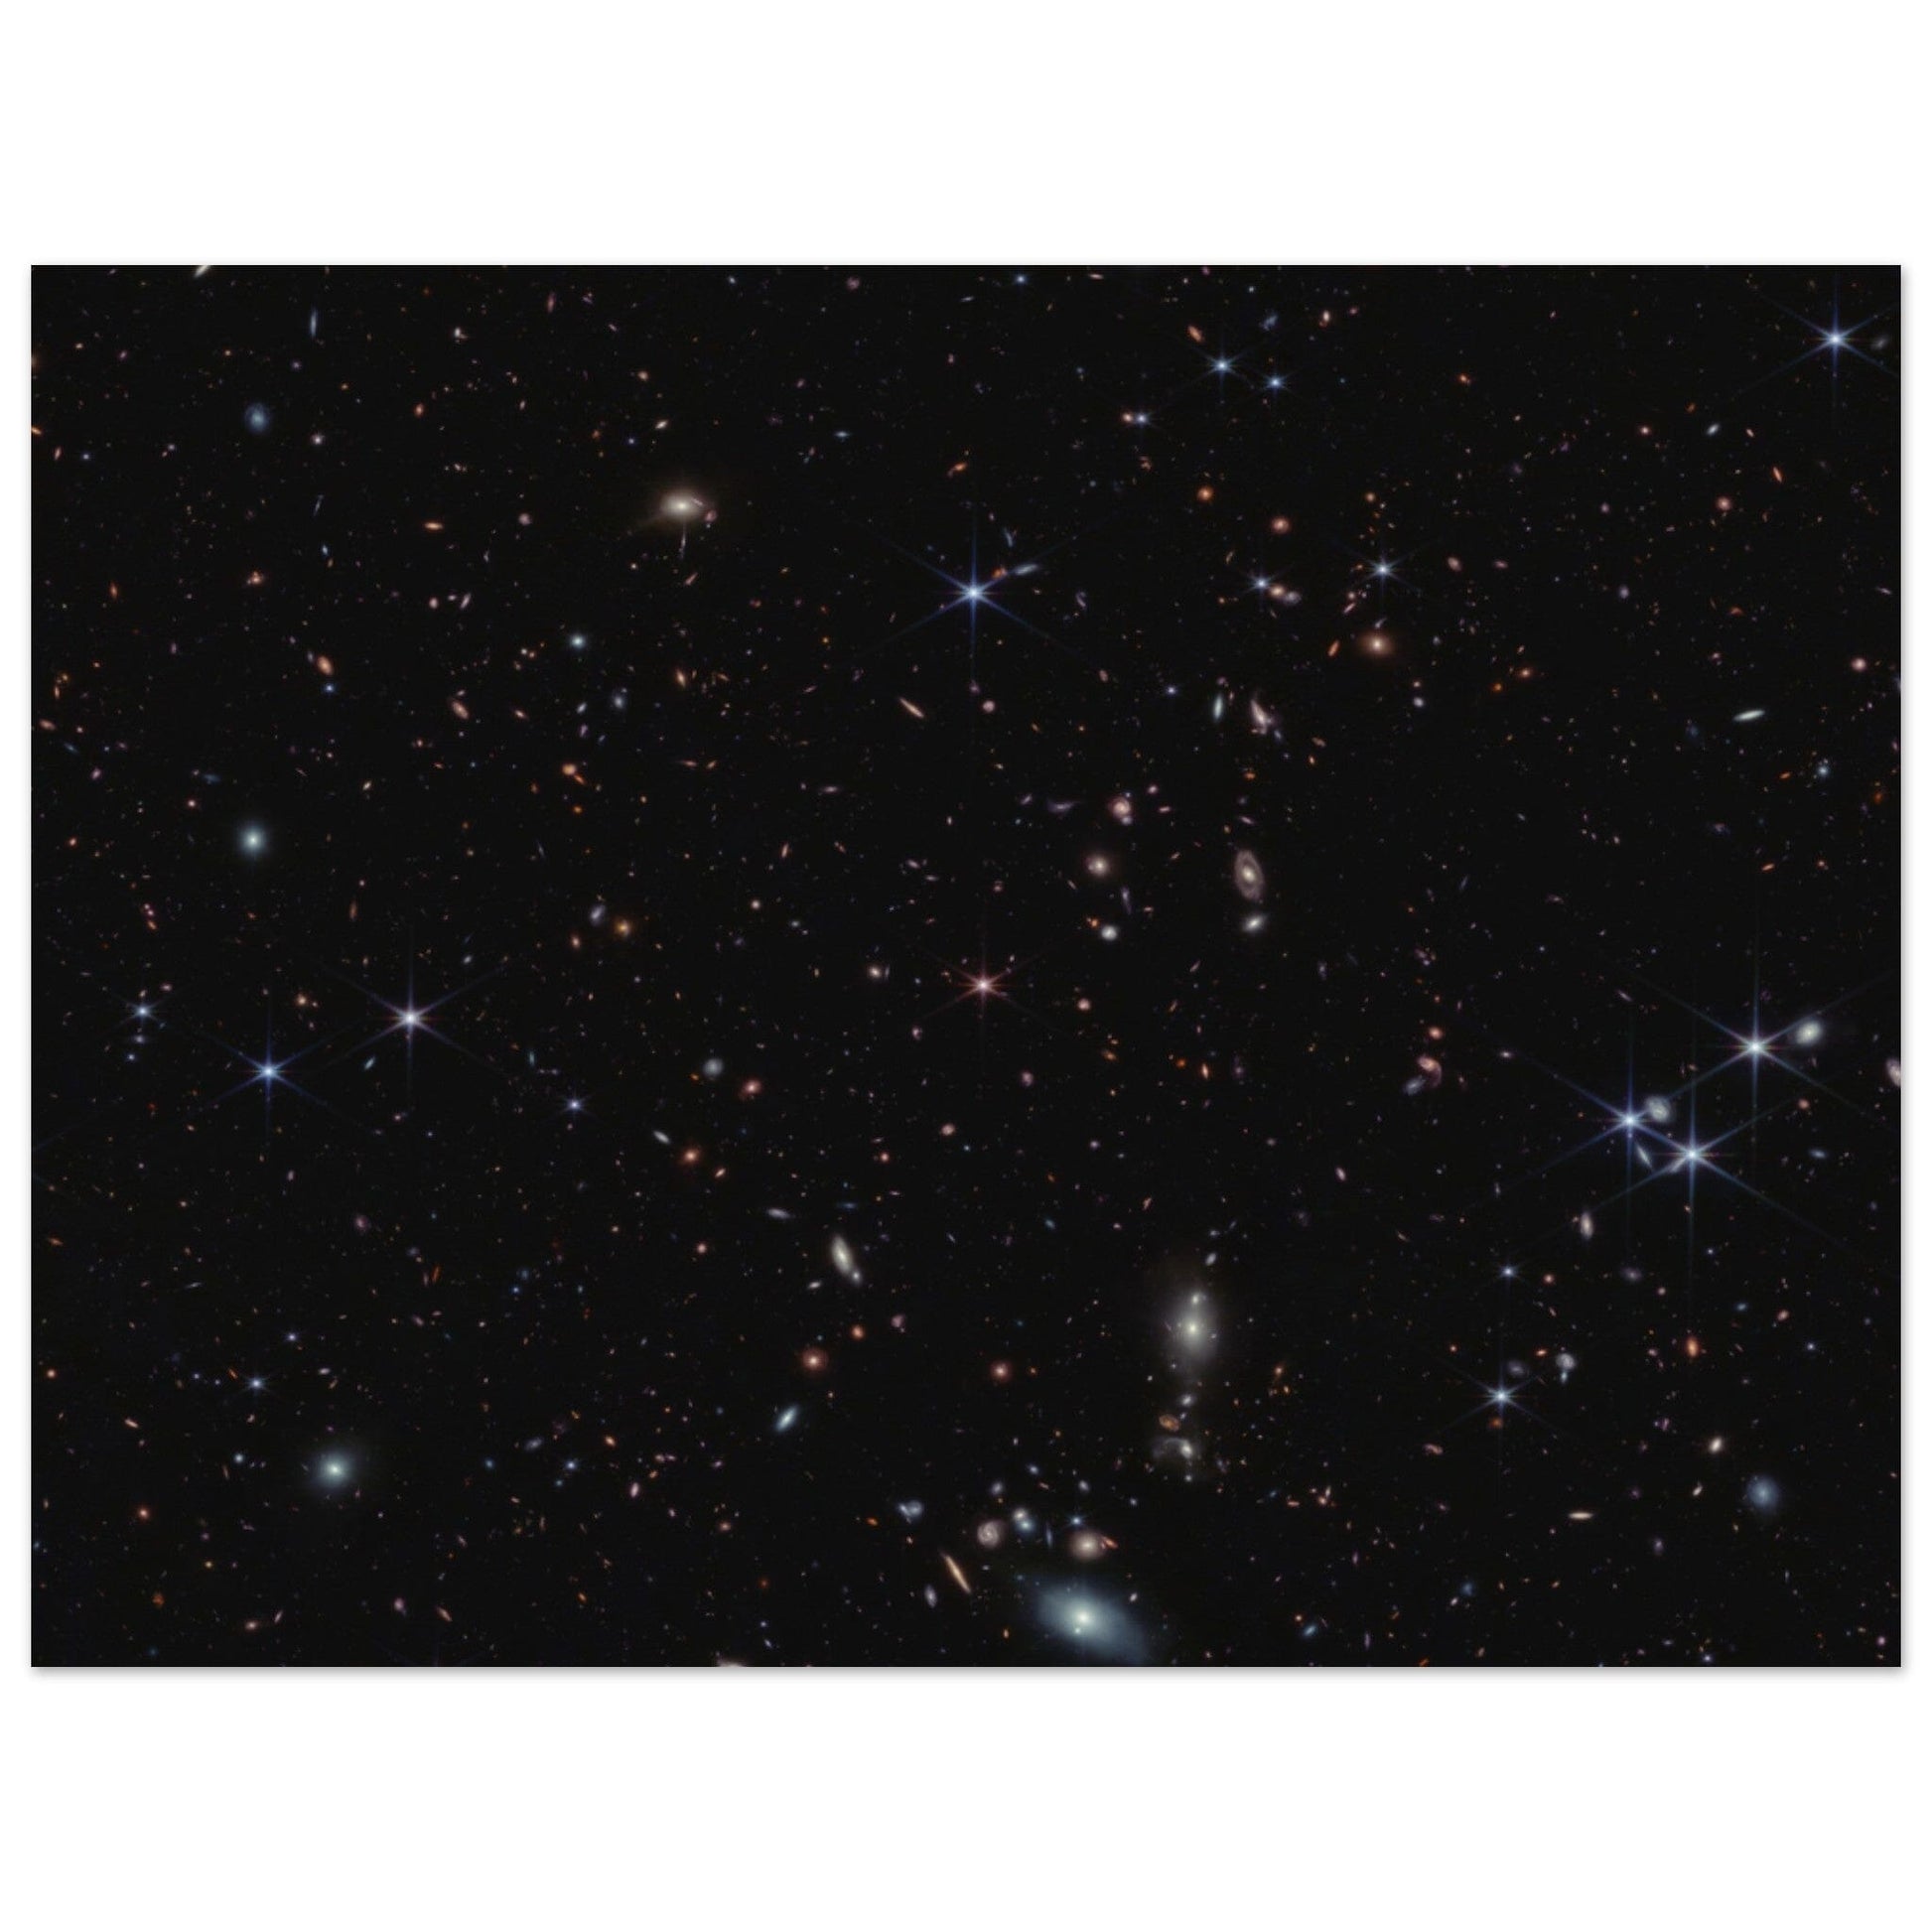 NASA - Poster - 18. Quasar J0100+2802 (NIRCam Image) - James Webb Space Telescope Poster Only TP Aviation Art 75x100 cm / 30x40″ 